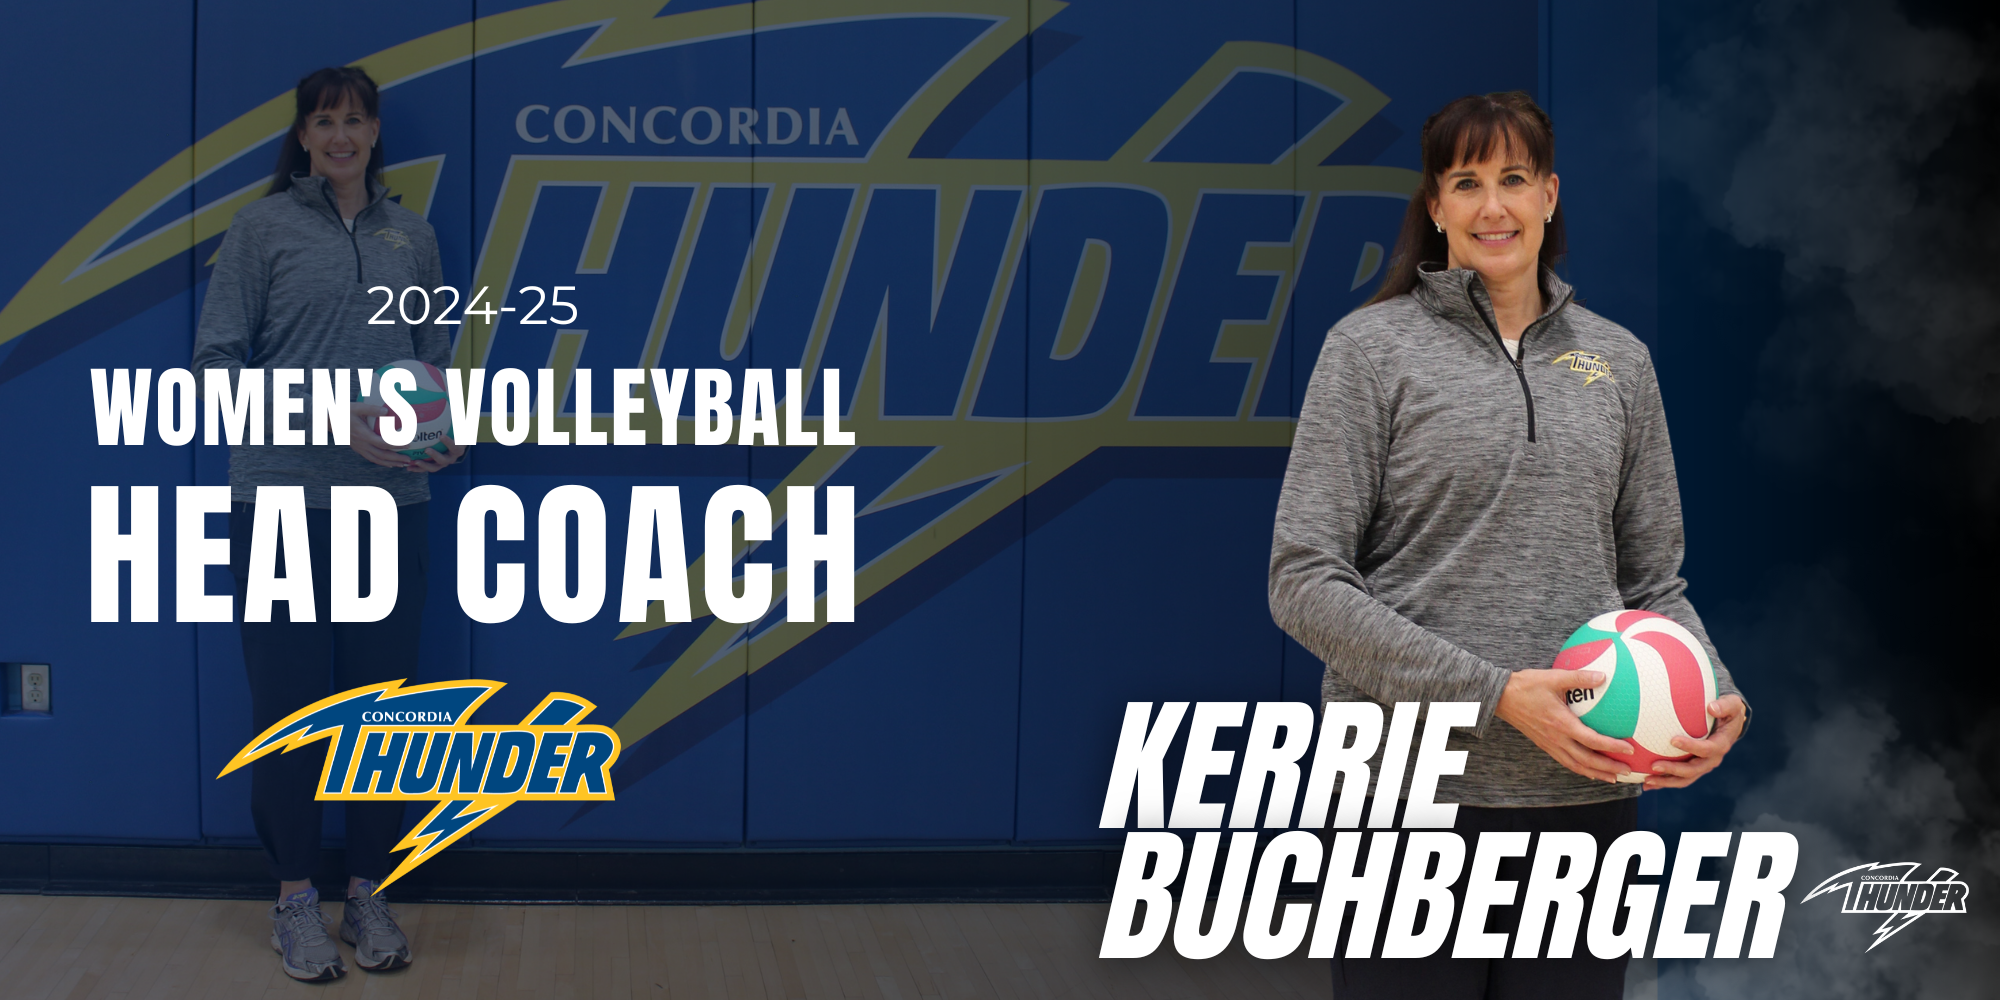 Kerrie Buchberger Named New Head Coach of Thunder Women's Volleyball